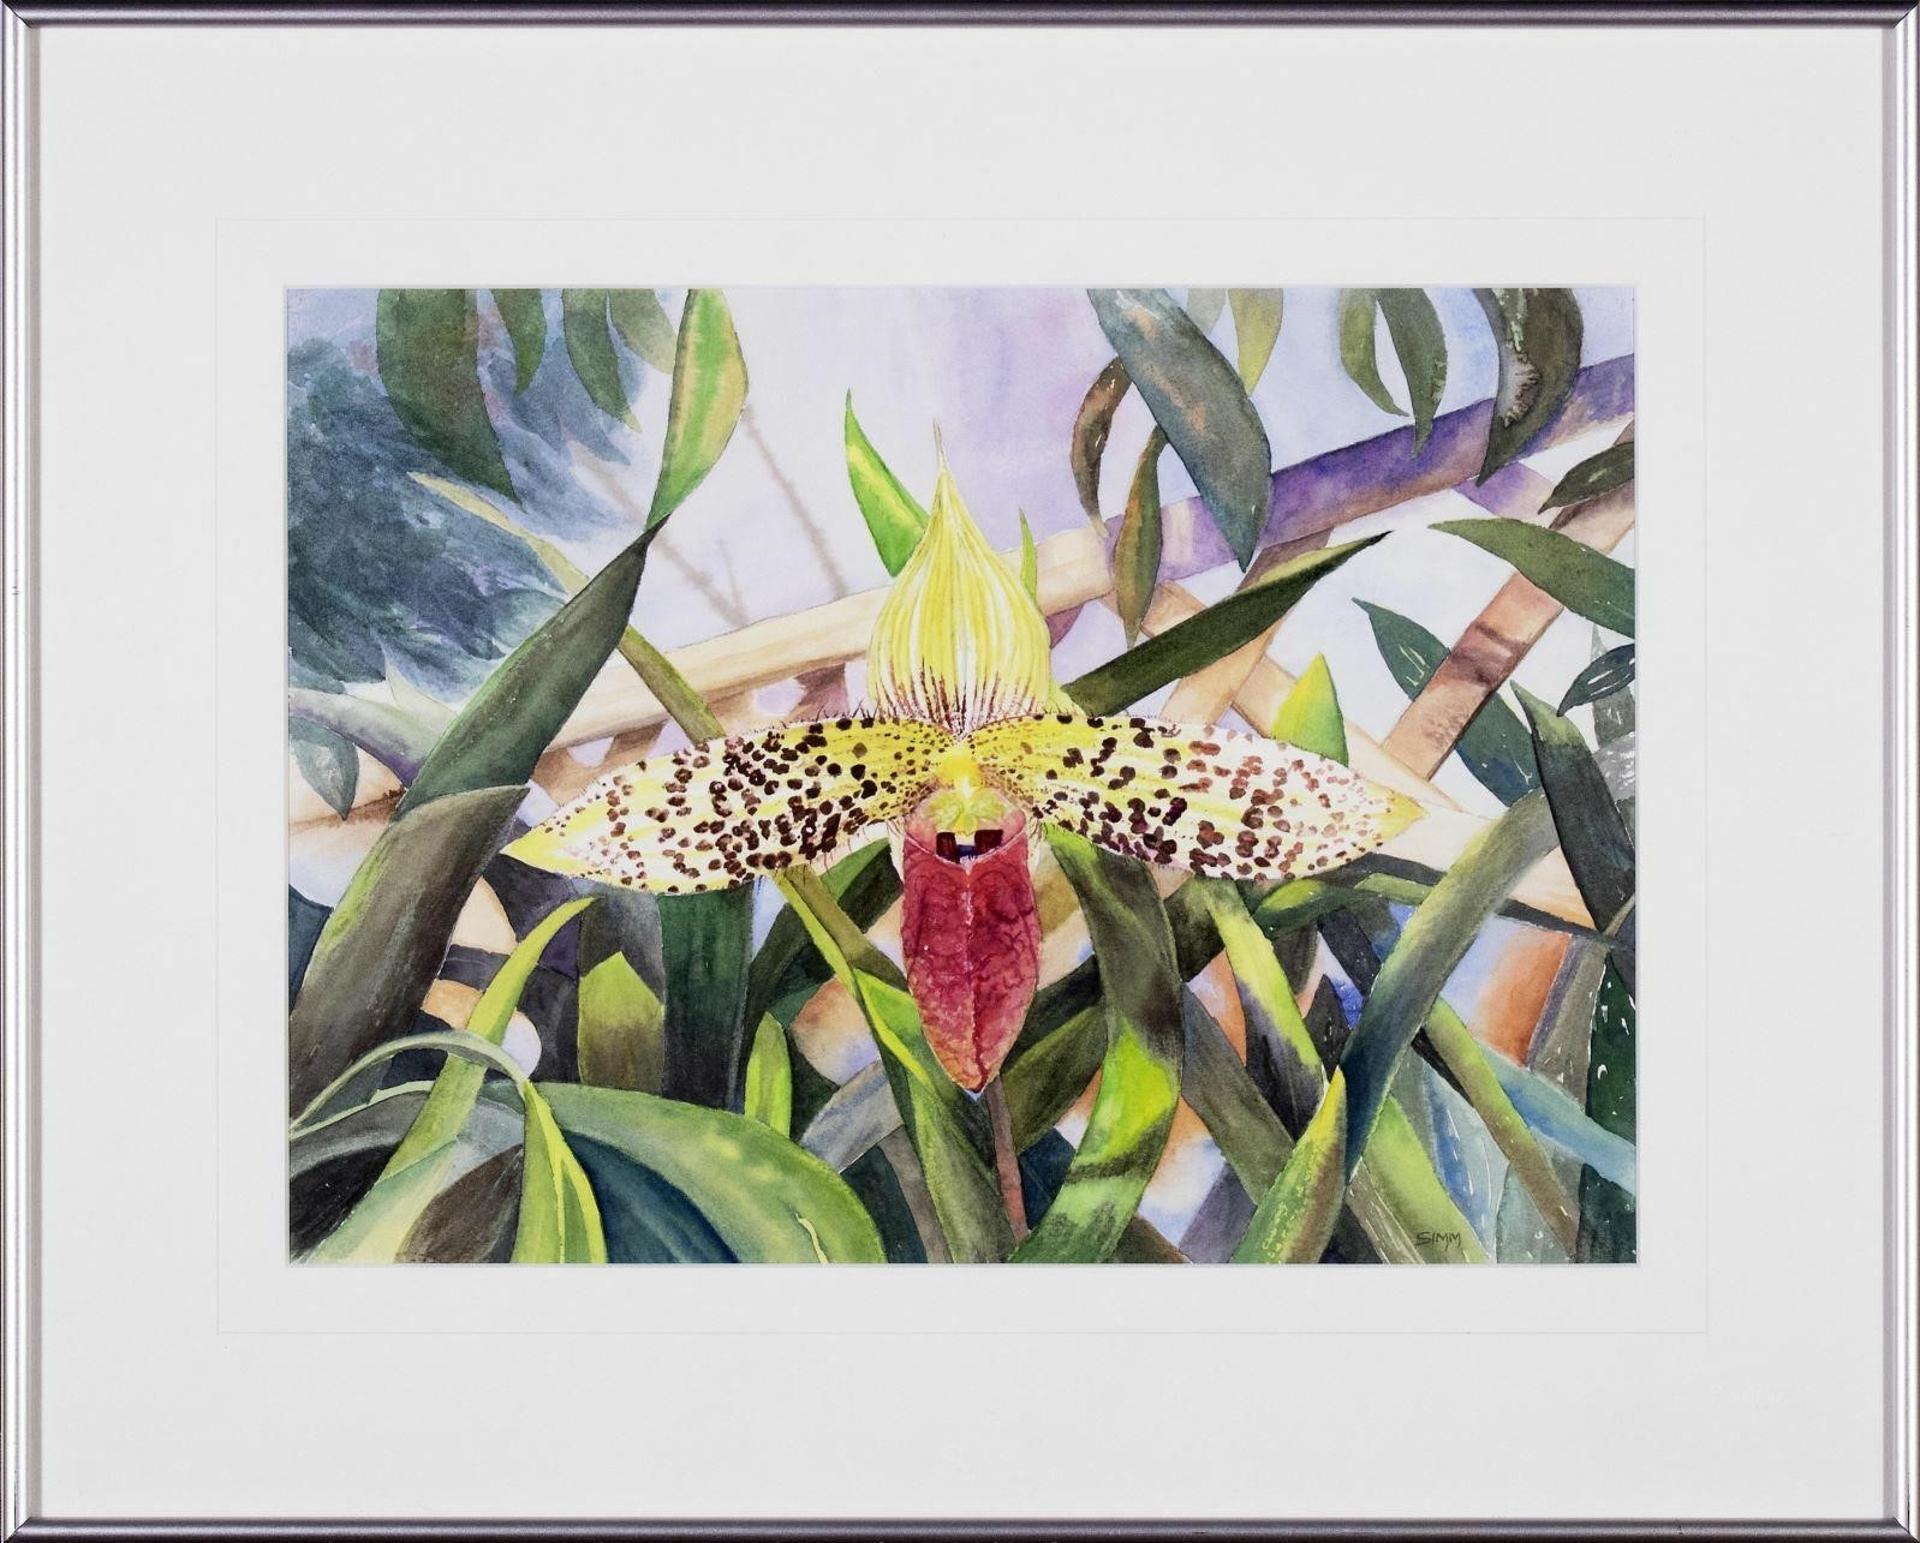 Yvette Simm (1937) - Ladyslipper Orchid